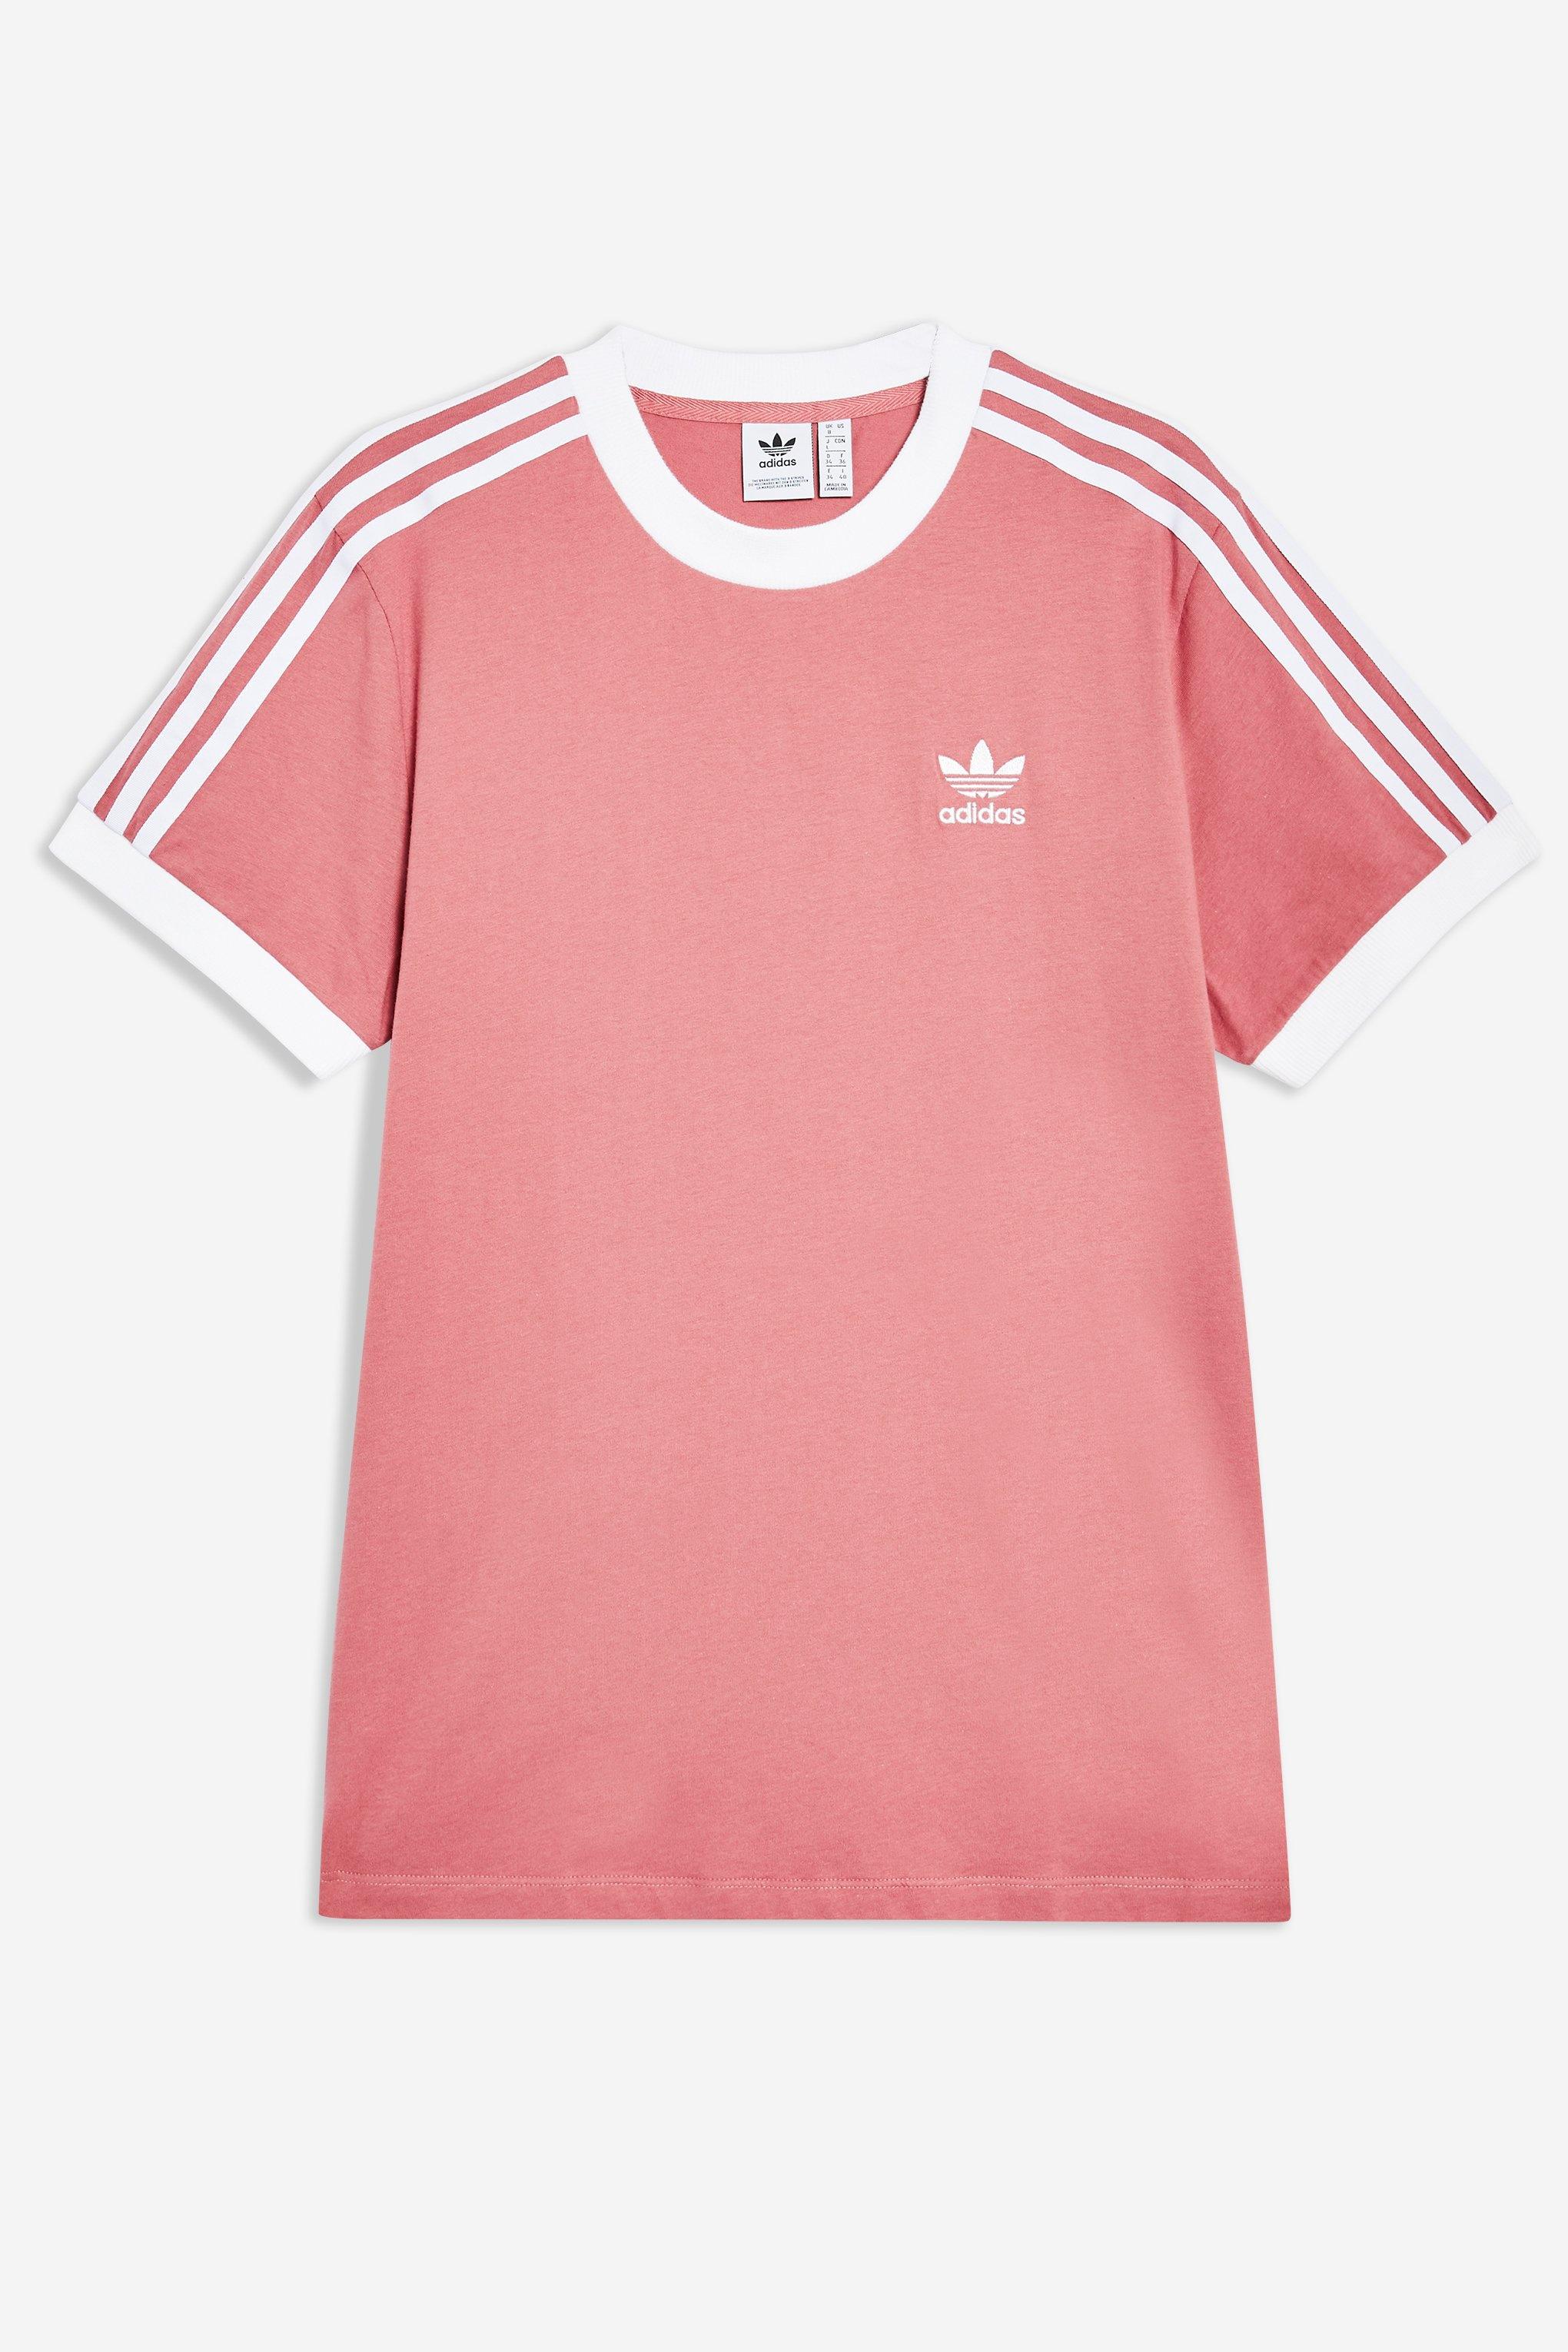 dark pink adidas shirt